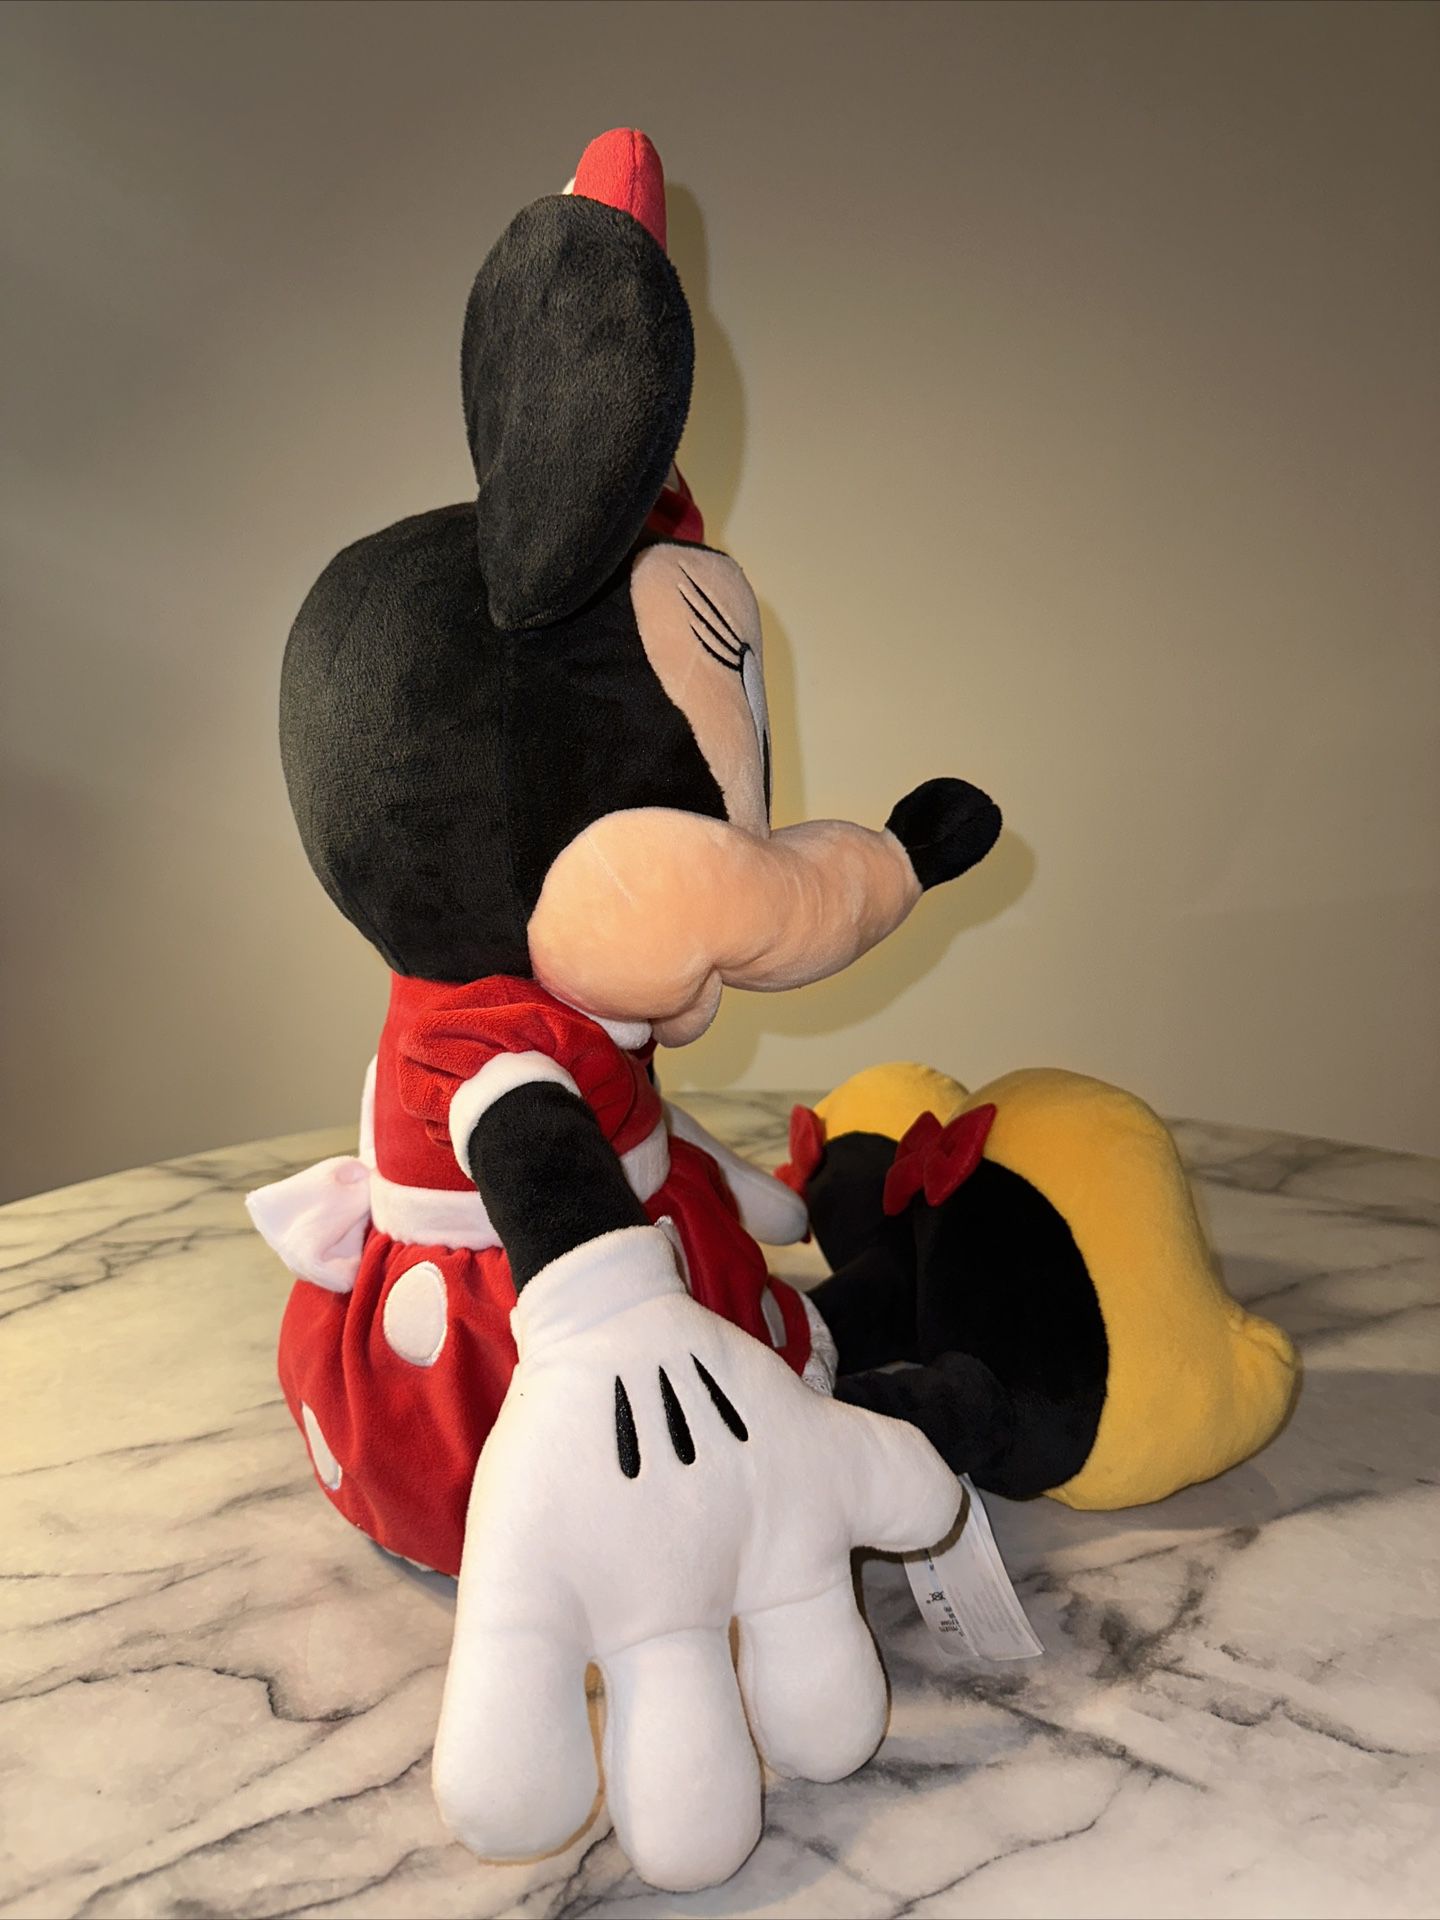 NWT MINT Disney Minnie Mouse Plush 26" Large Doll Classic Red Polka Dot Dress